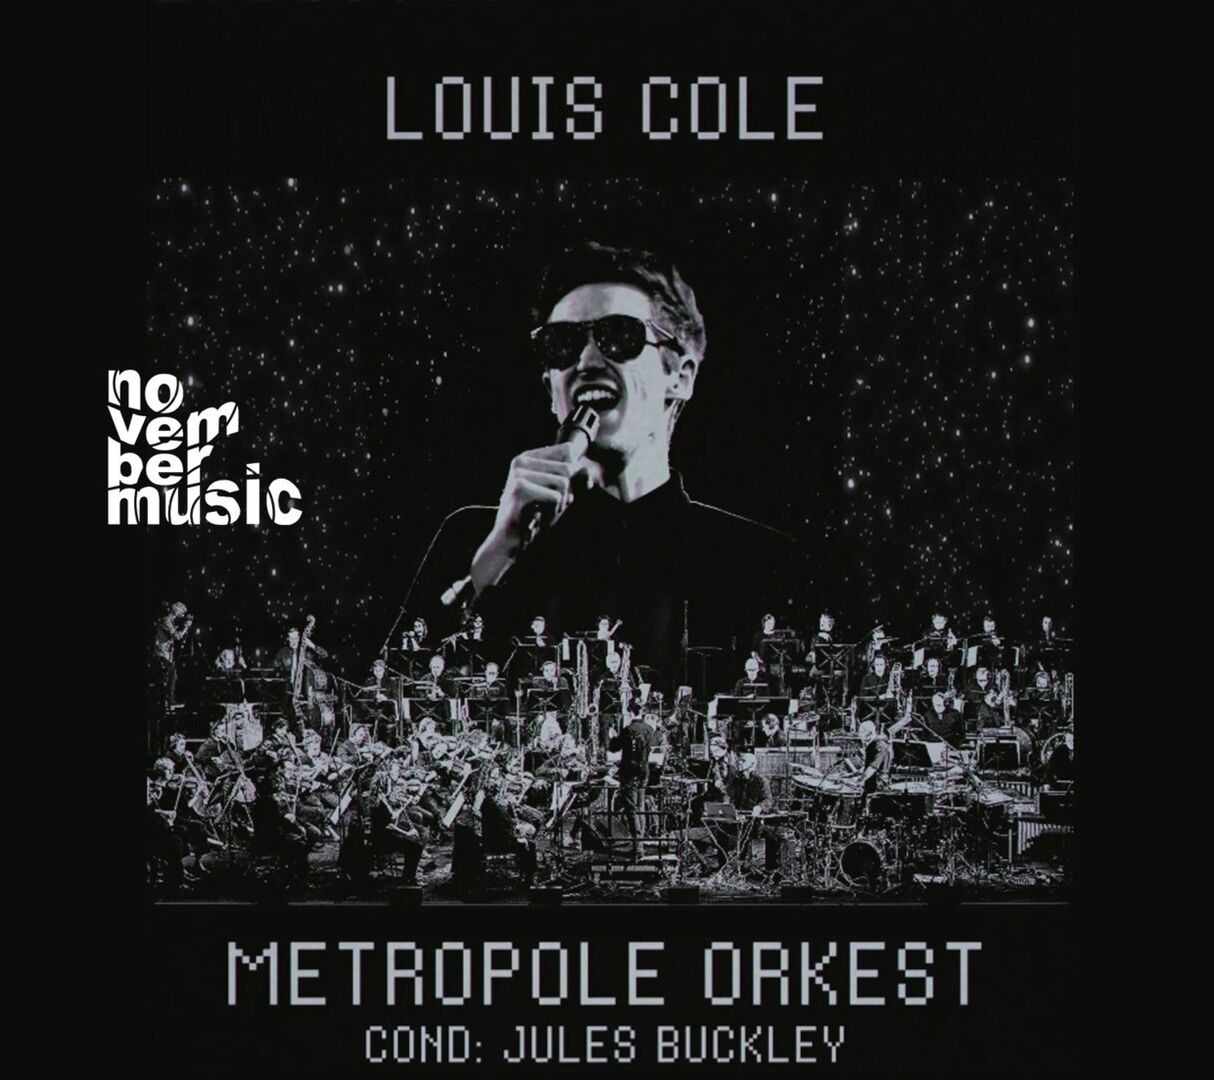 Metropole Orkest & Louis Cole